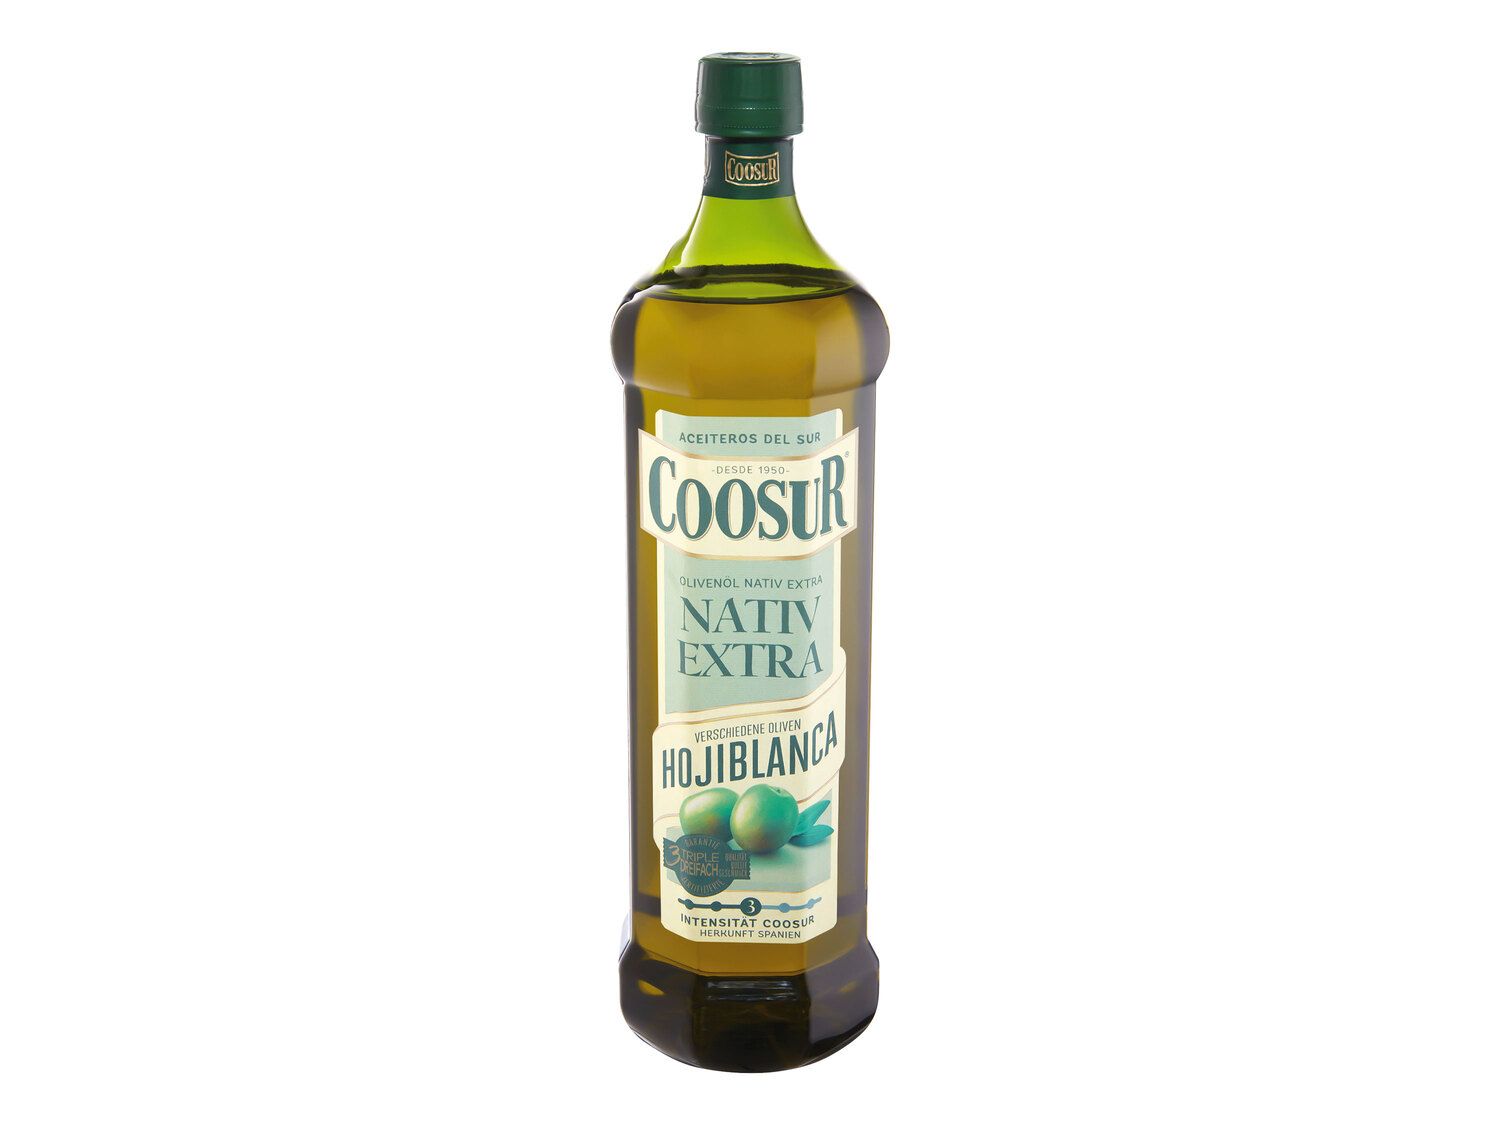 Coosur Olivenöl Deutschland - Lidl Hojiblanca